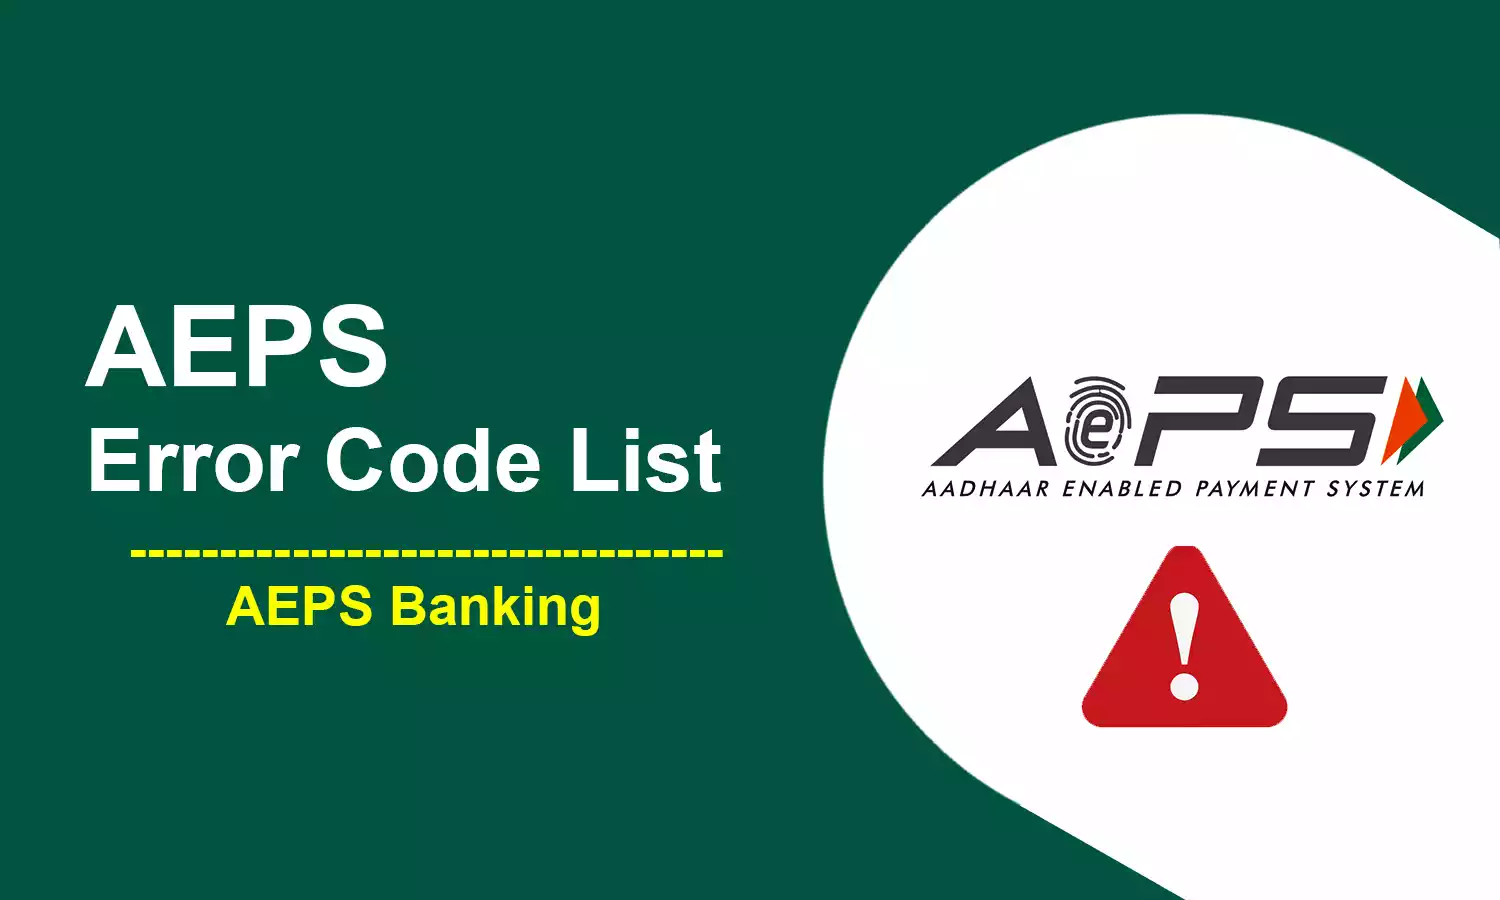 AEPS Error Code